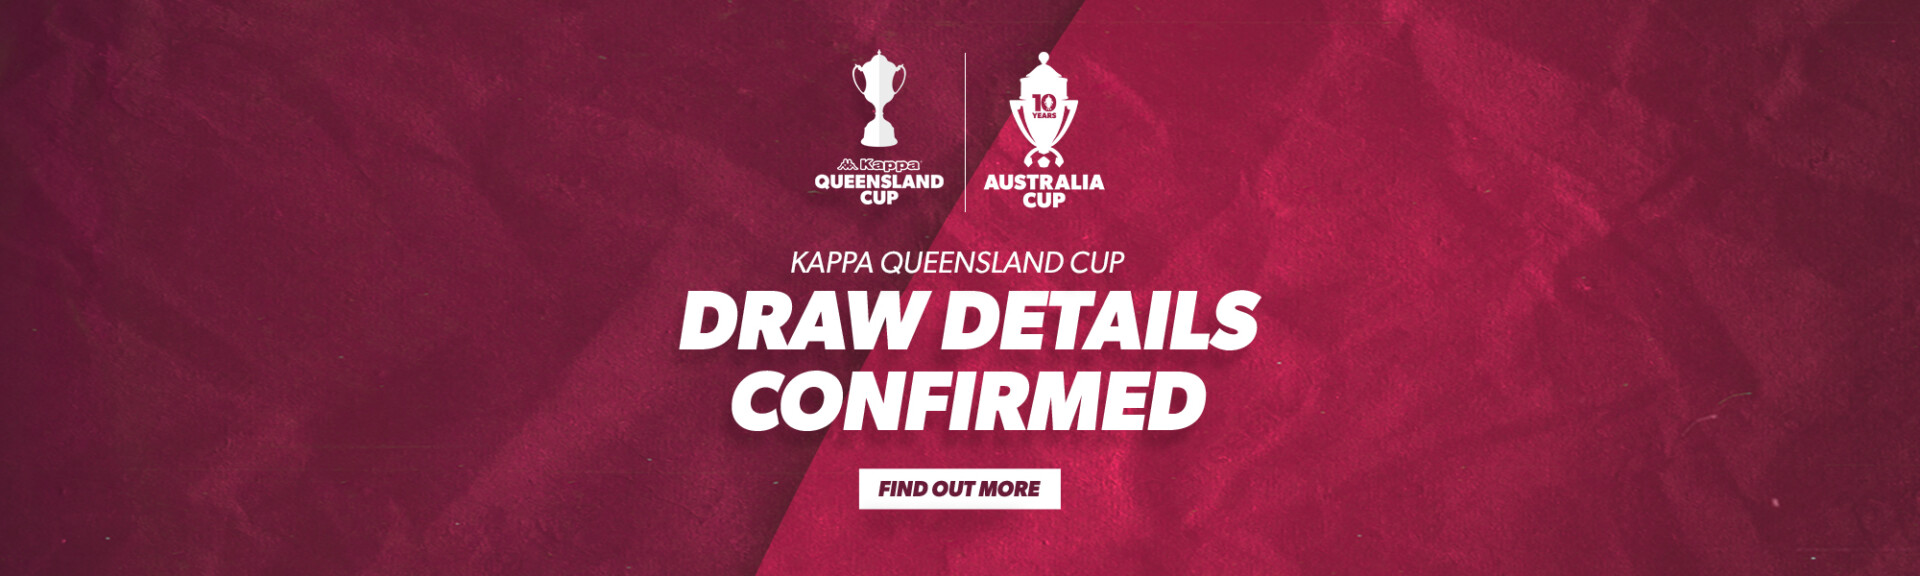 2405002 - Comps - Queensland Cup - Finals Draw Announcement - Web Banner - 2000 x 600